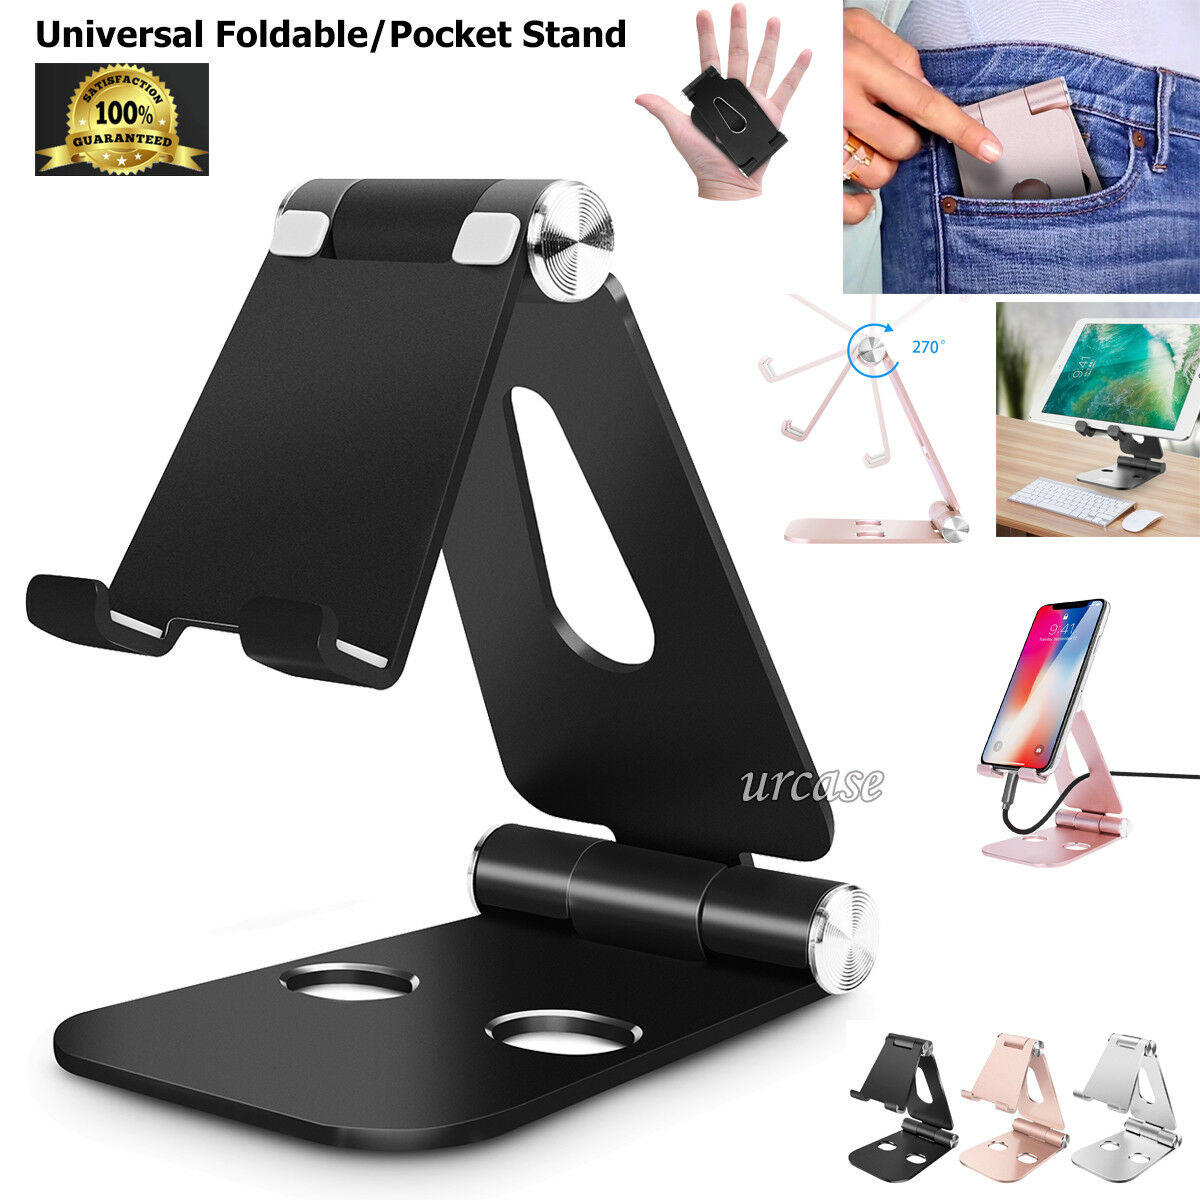 Universal Foldable Aluminum Desk Stand Adjustable Holder Fr Iphone Galaxy Tablet